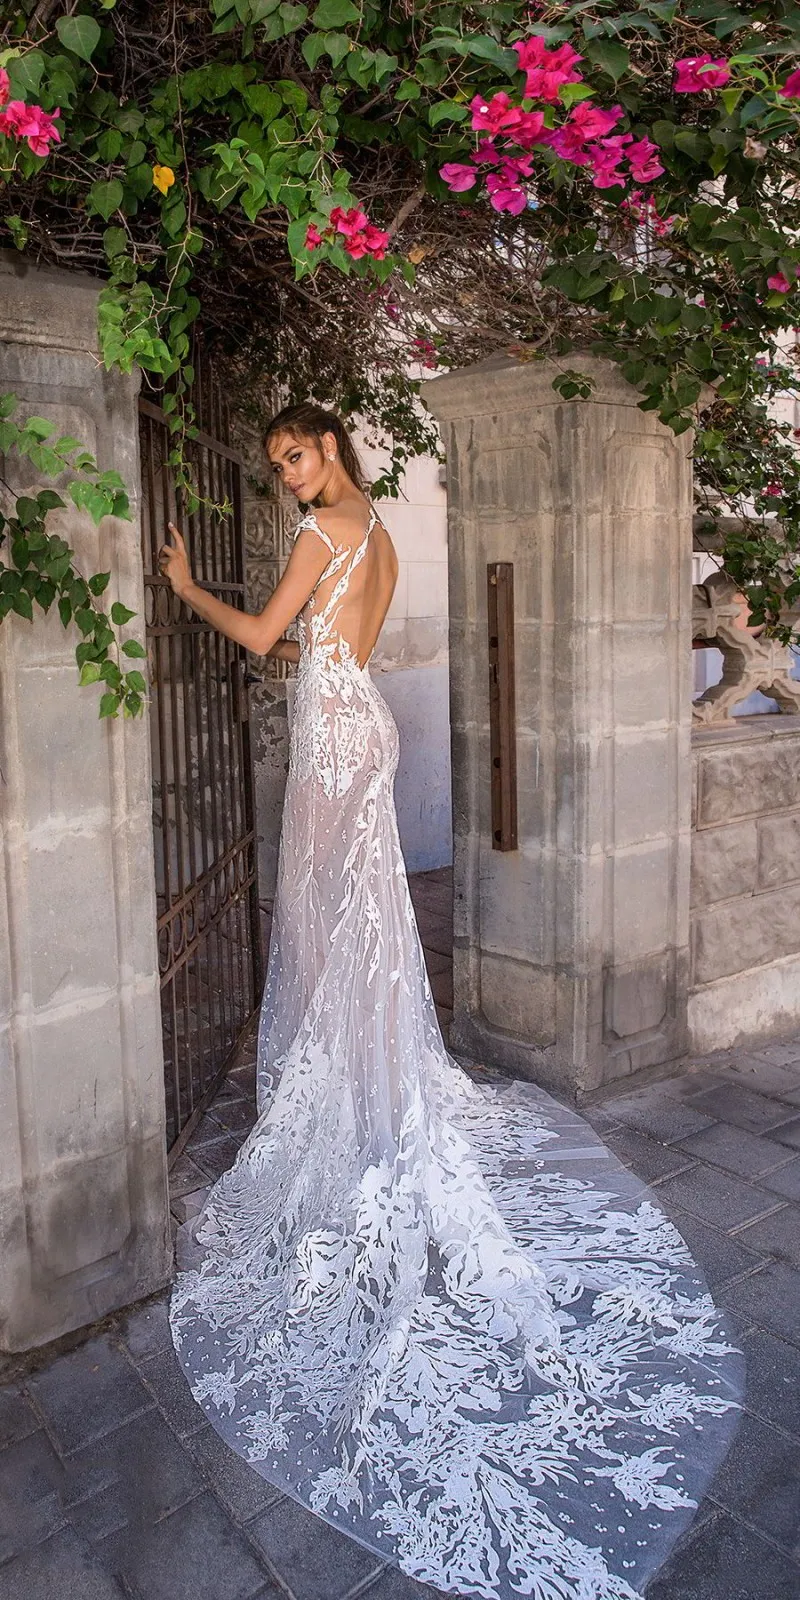 2019 Elihav Sasson Mermaid Wedding Dresses Sheer Neck Lace Bridal Gowns vestido de novia Cap Sleeve Beach Wedding Dress279c